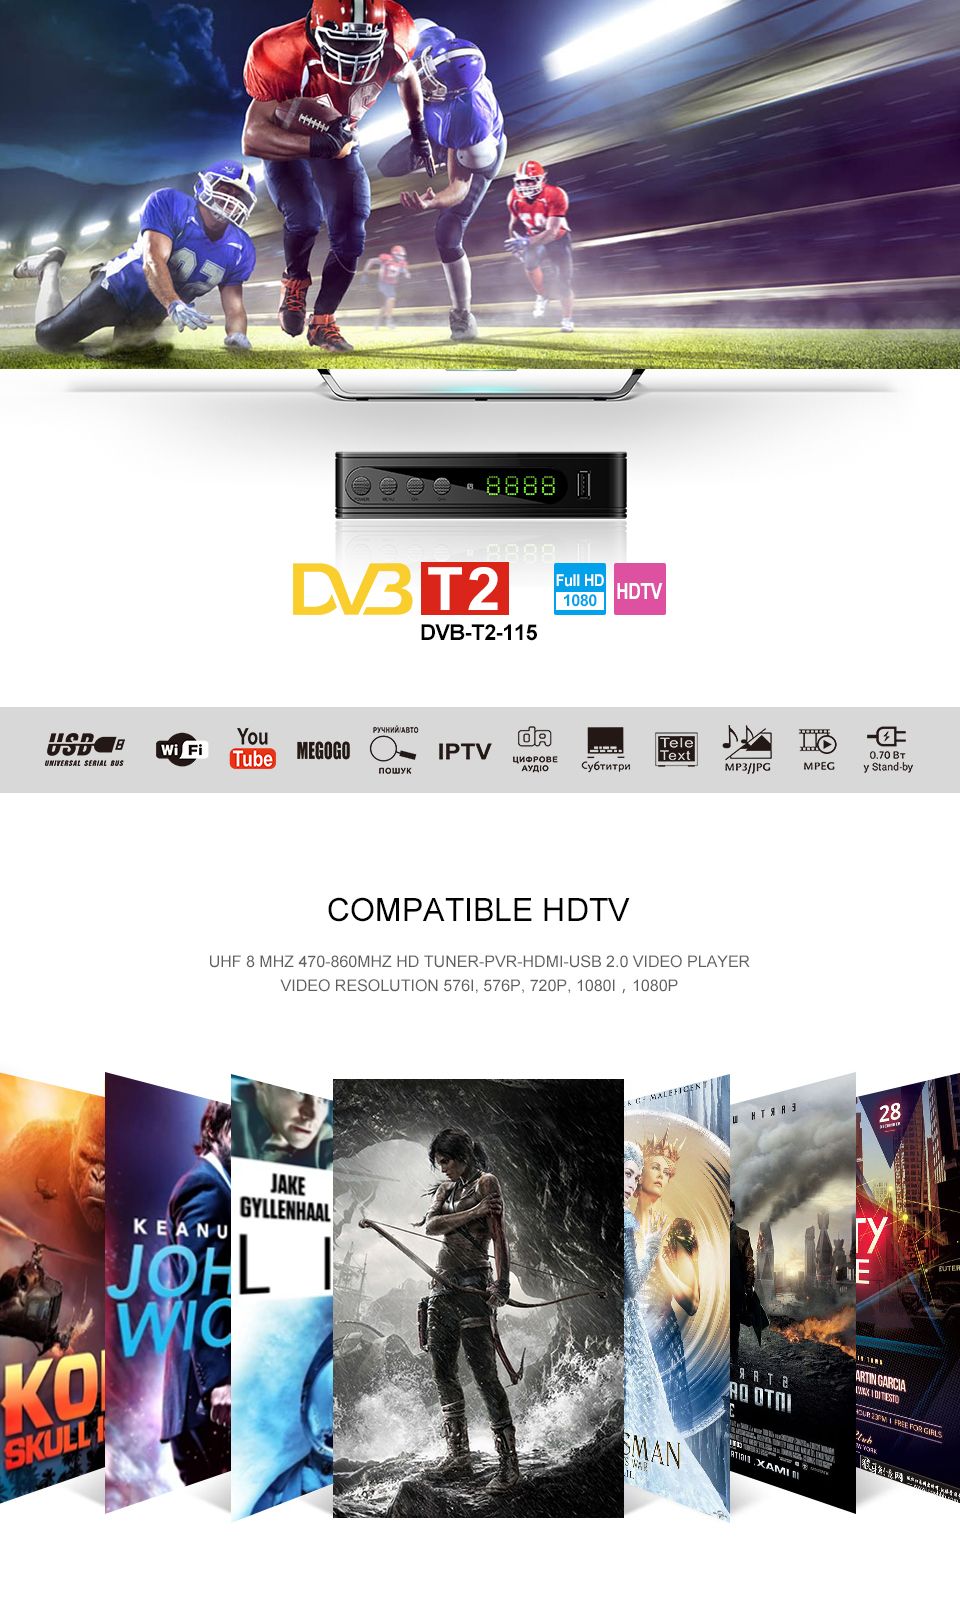 U2C-DVB-T2-115-DVB-T2-H264-HD-TV-Signal-Terrestrial-Receiver-Set-Top-Box-Support-USB-1389791